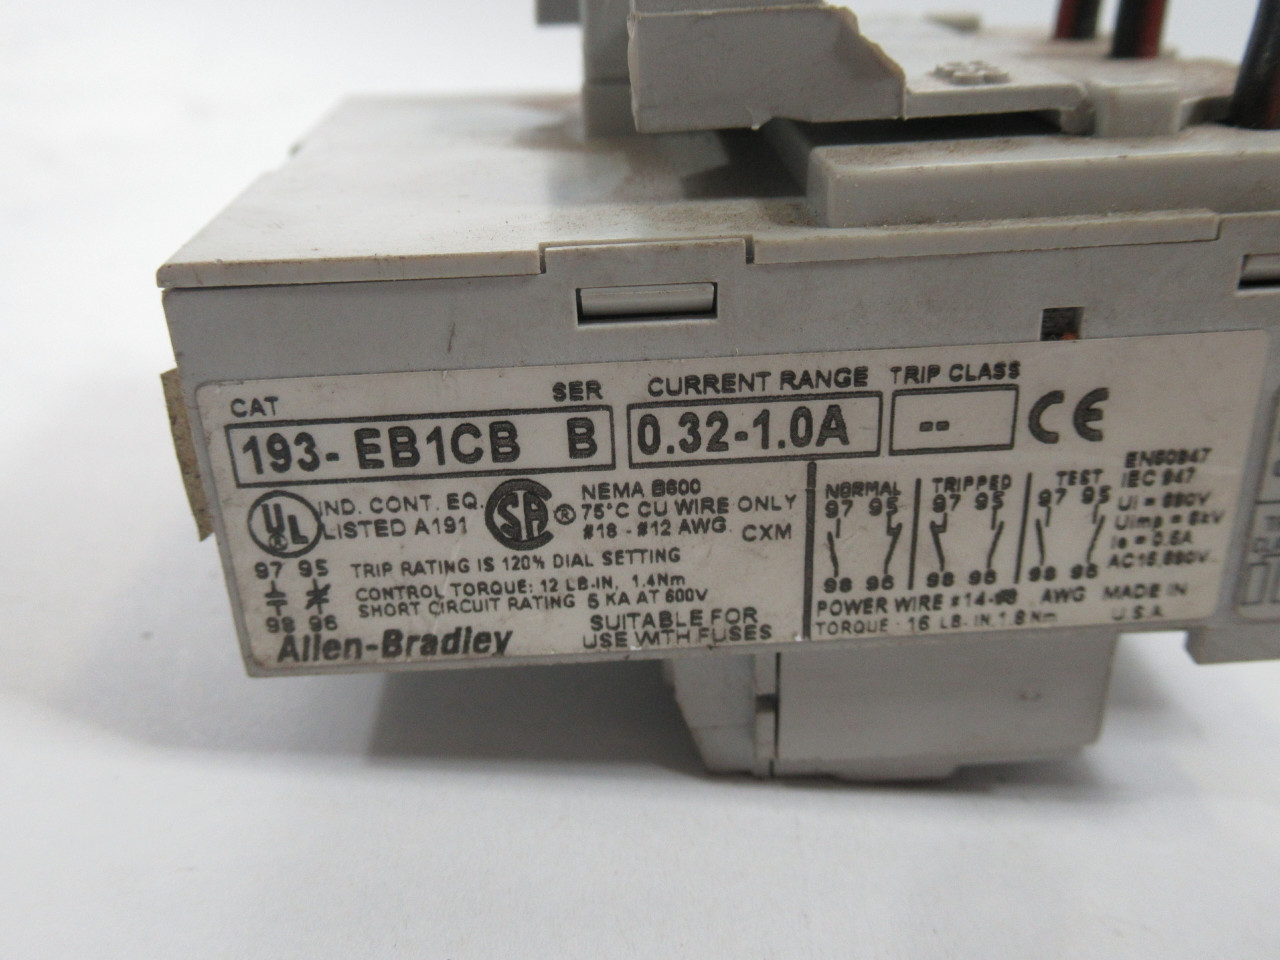 Allen-Bradley 193-EB1CB Series B Overload Relay 0.32-1.0A 690V USED